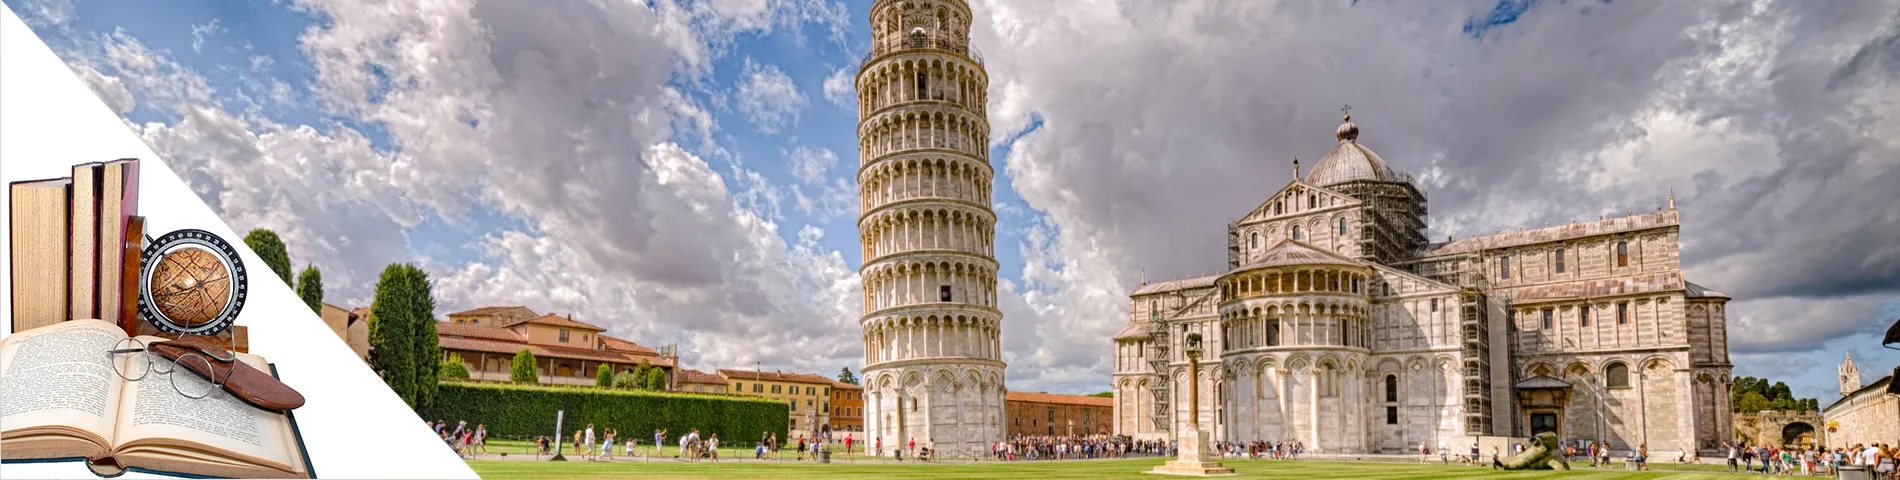 Pisa - Italiano + Arte y Literatura